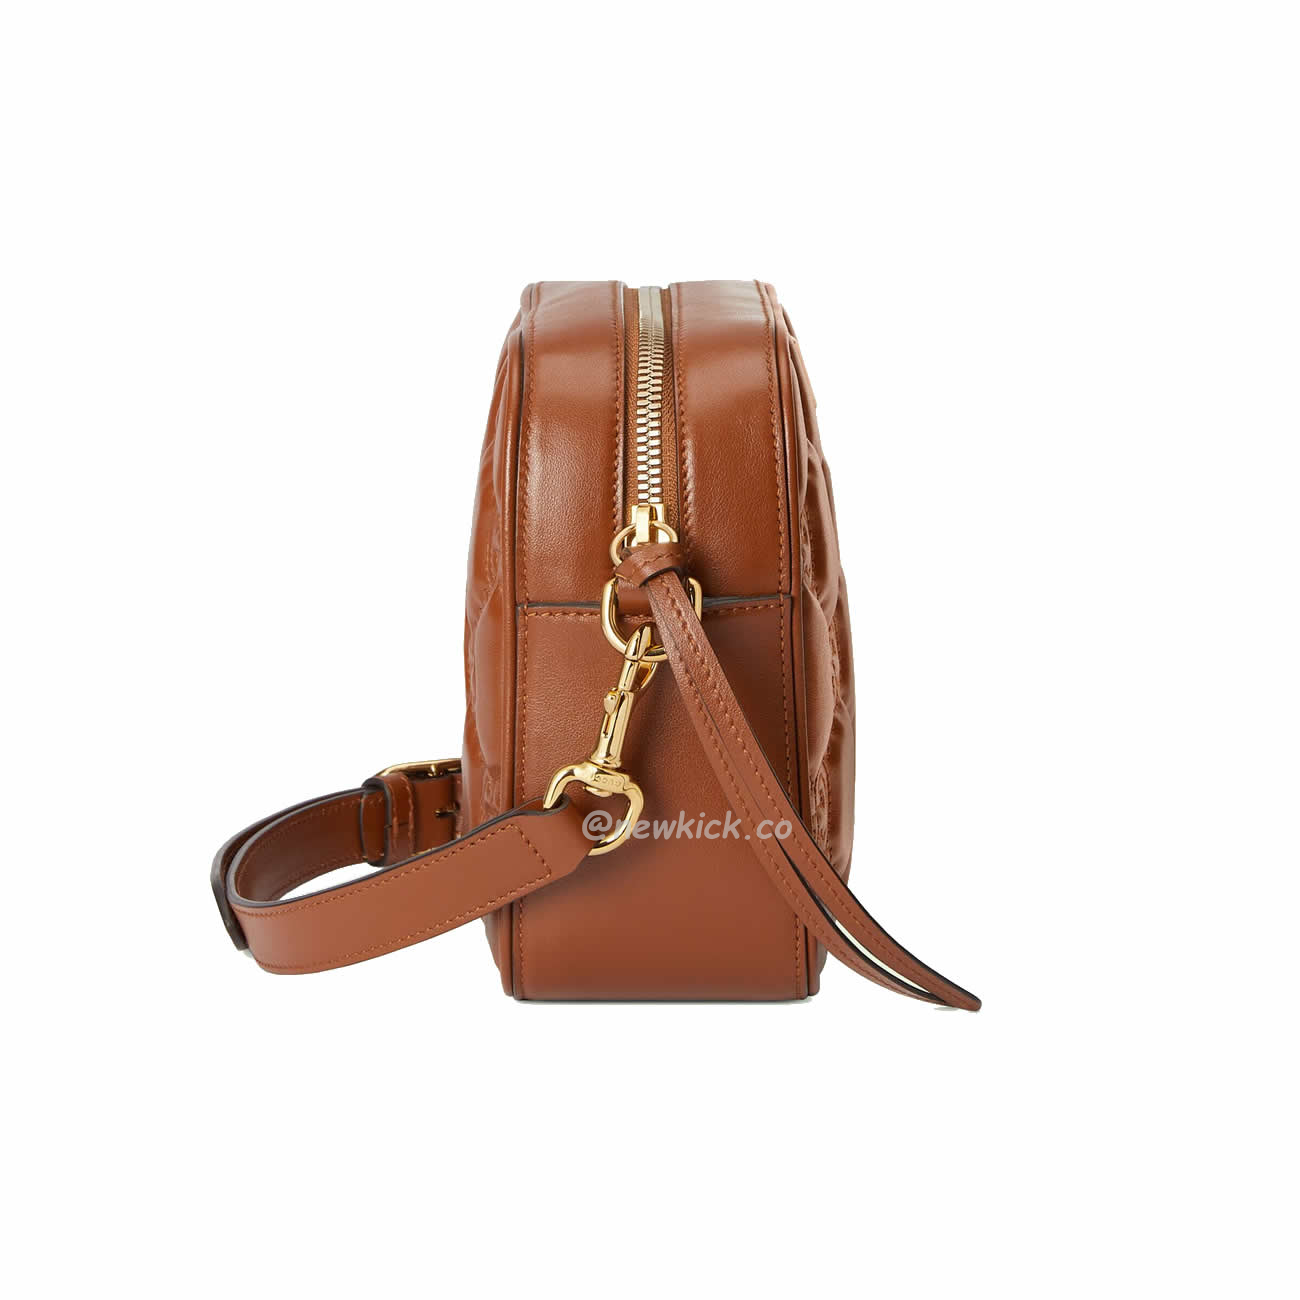 Gucci Gg Matelass Small Bag Product Details 702234 Um8hg 1046 (12) - newkick.org